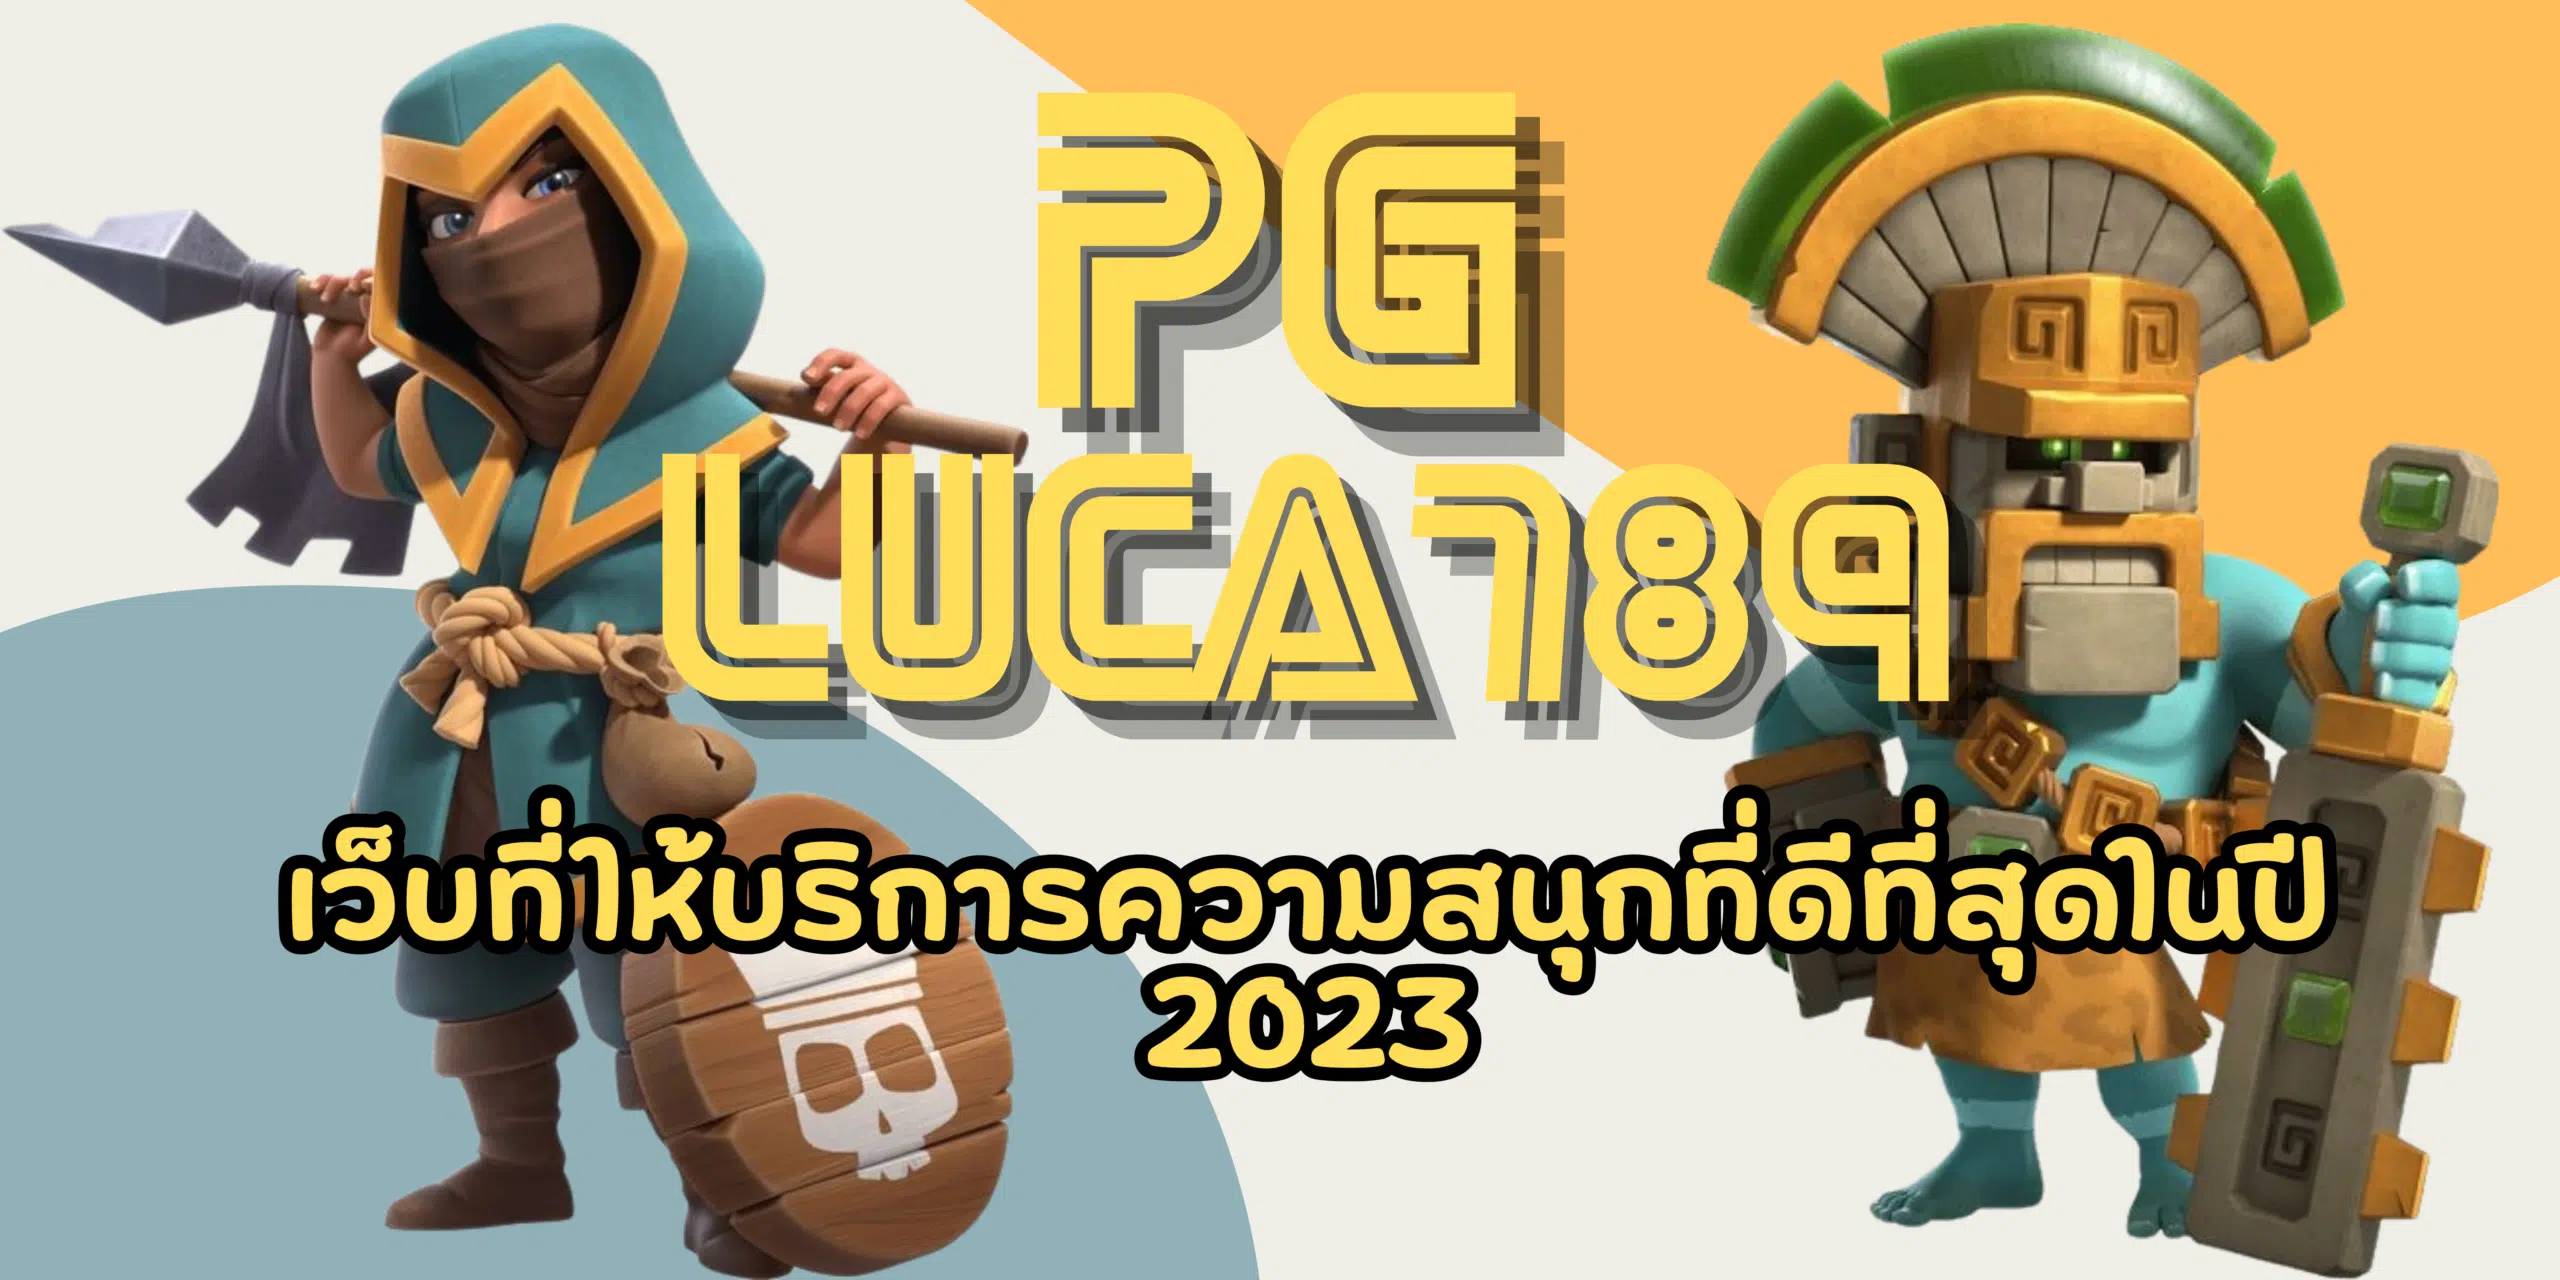 PG-luca789-สมัครเล่น